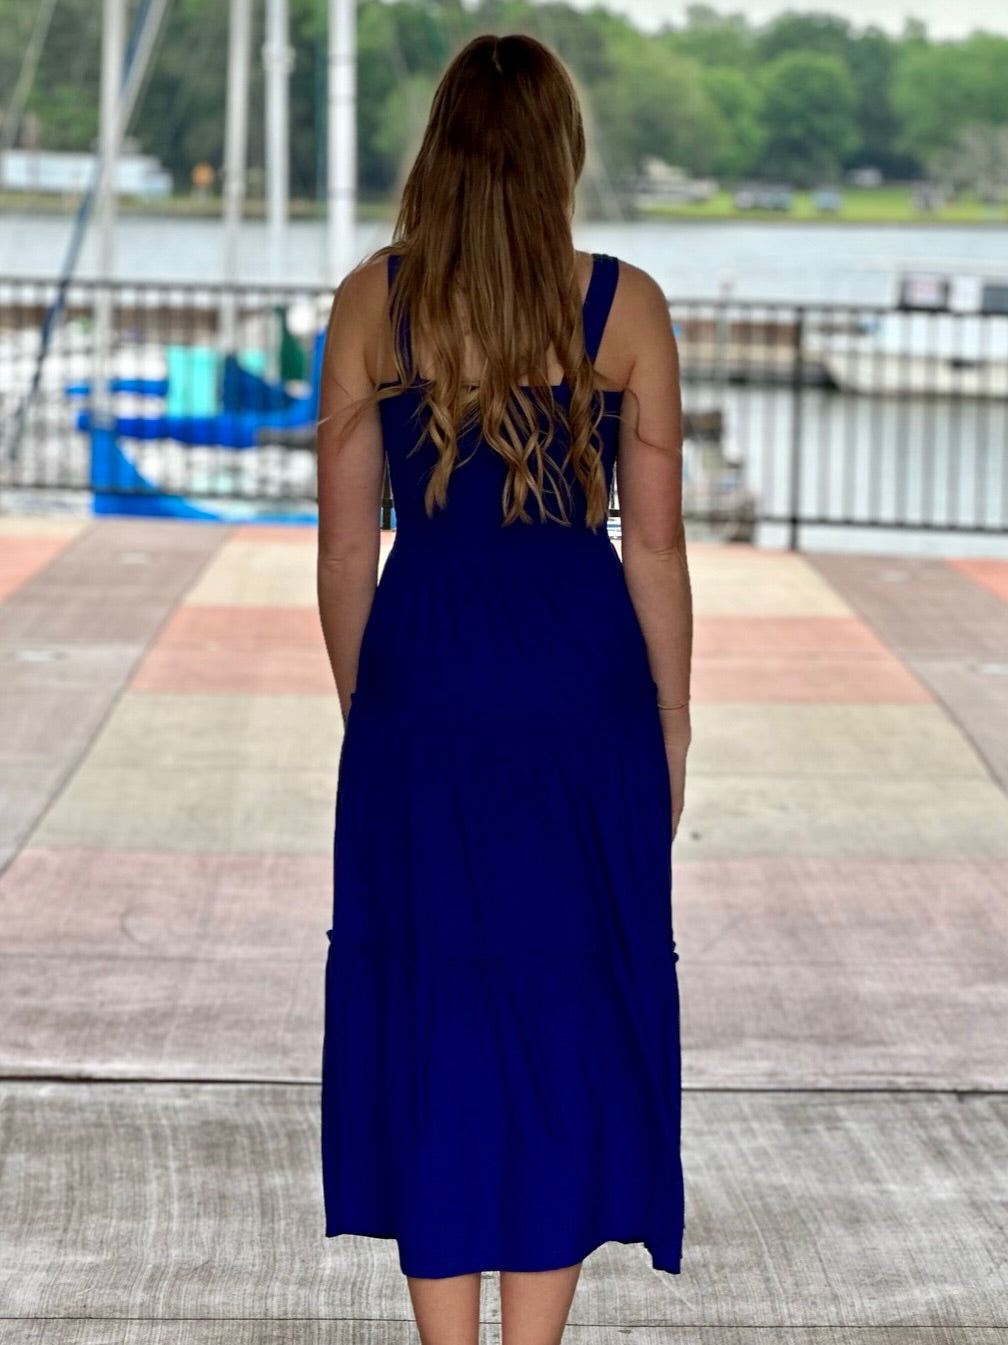 Lexi in bright blue midi dress back view